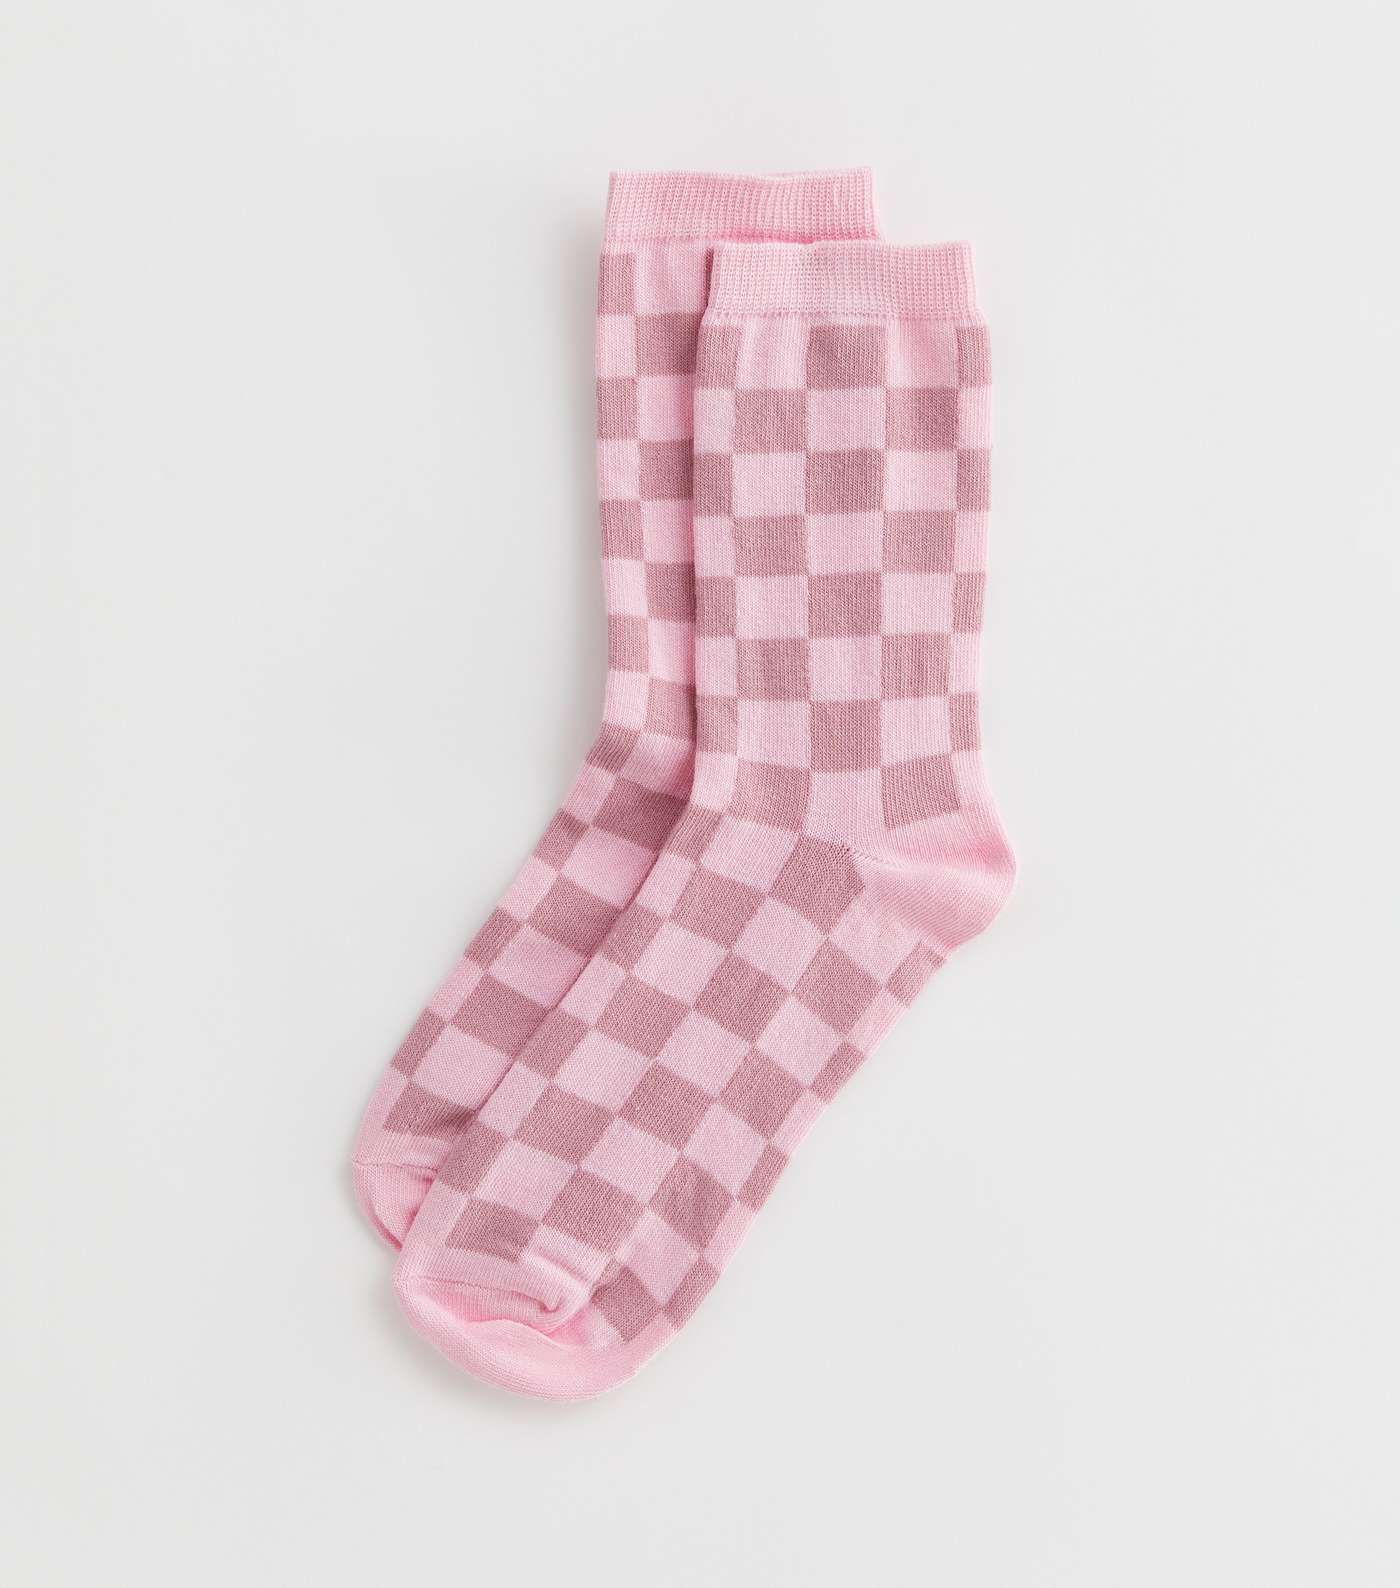 Pink Checkerboard Print Socks